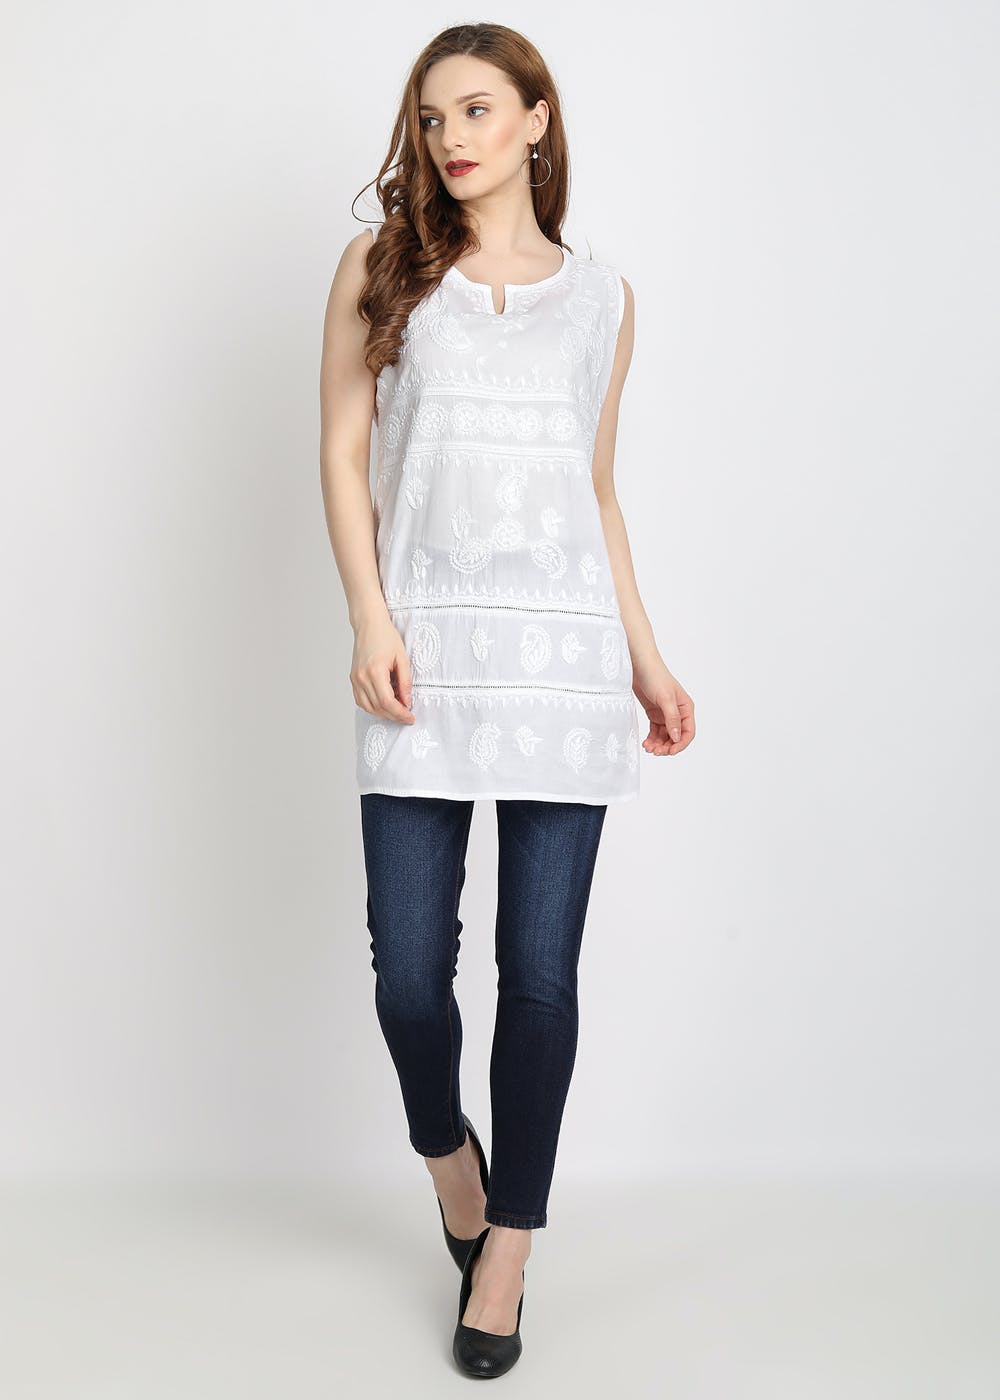 Chikan blouses- chikan tunics, tinics, shorts kurtis, long tops cotton  fabrics